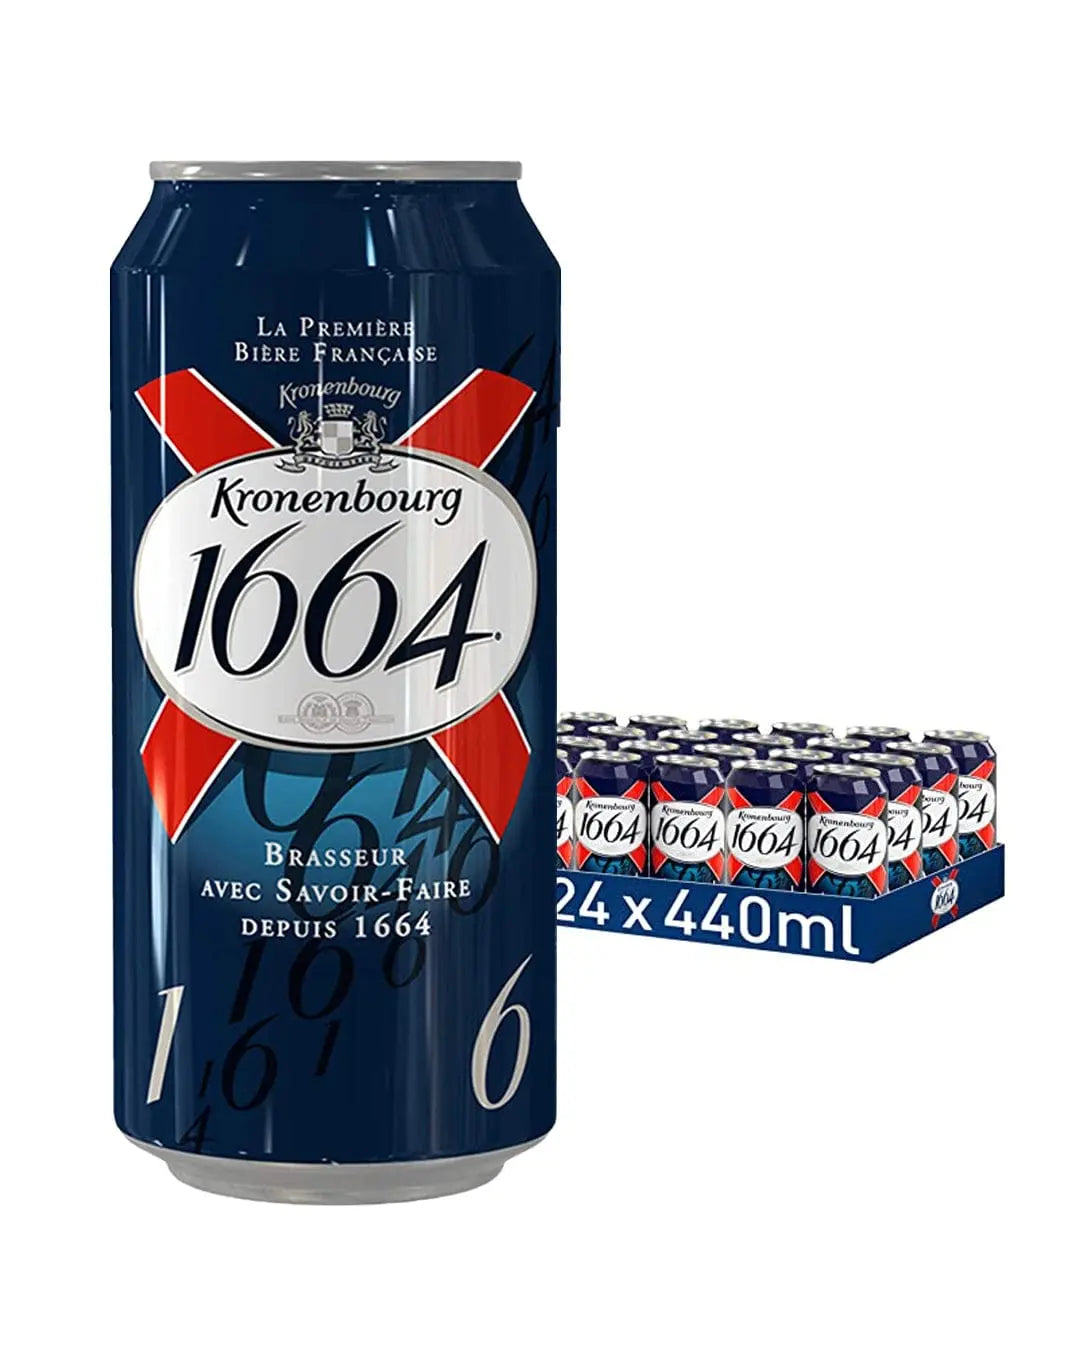 Kronenbourg 1664 Lager Beer Cans Multipack, 24 x 440 ml Beer